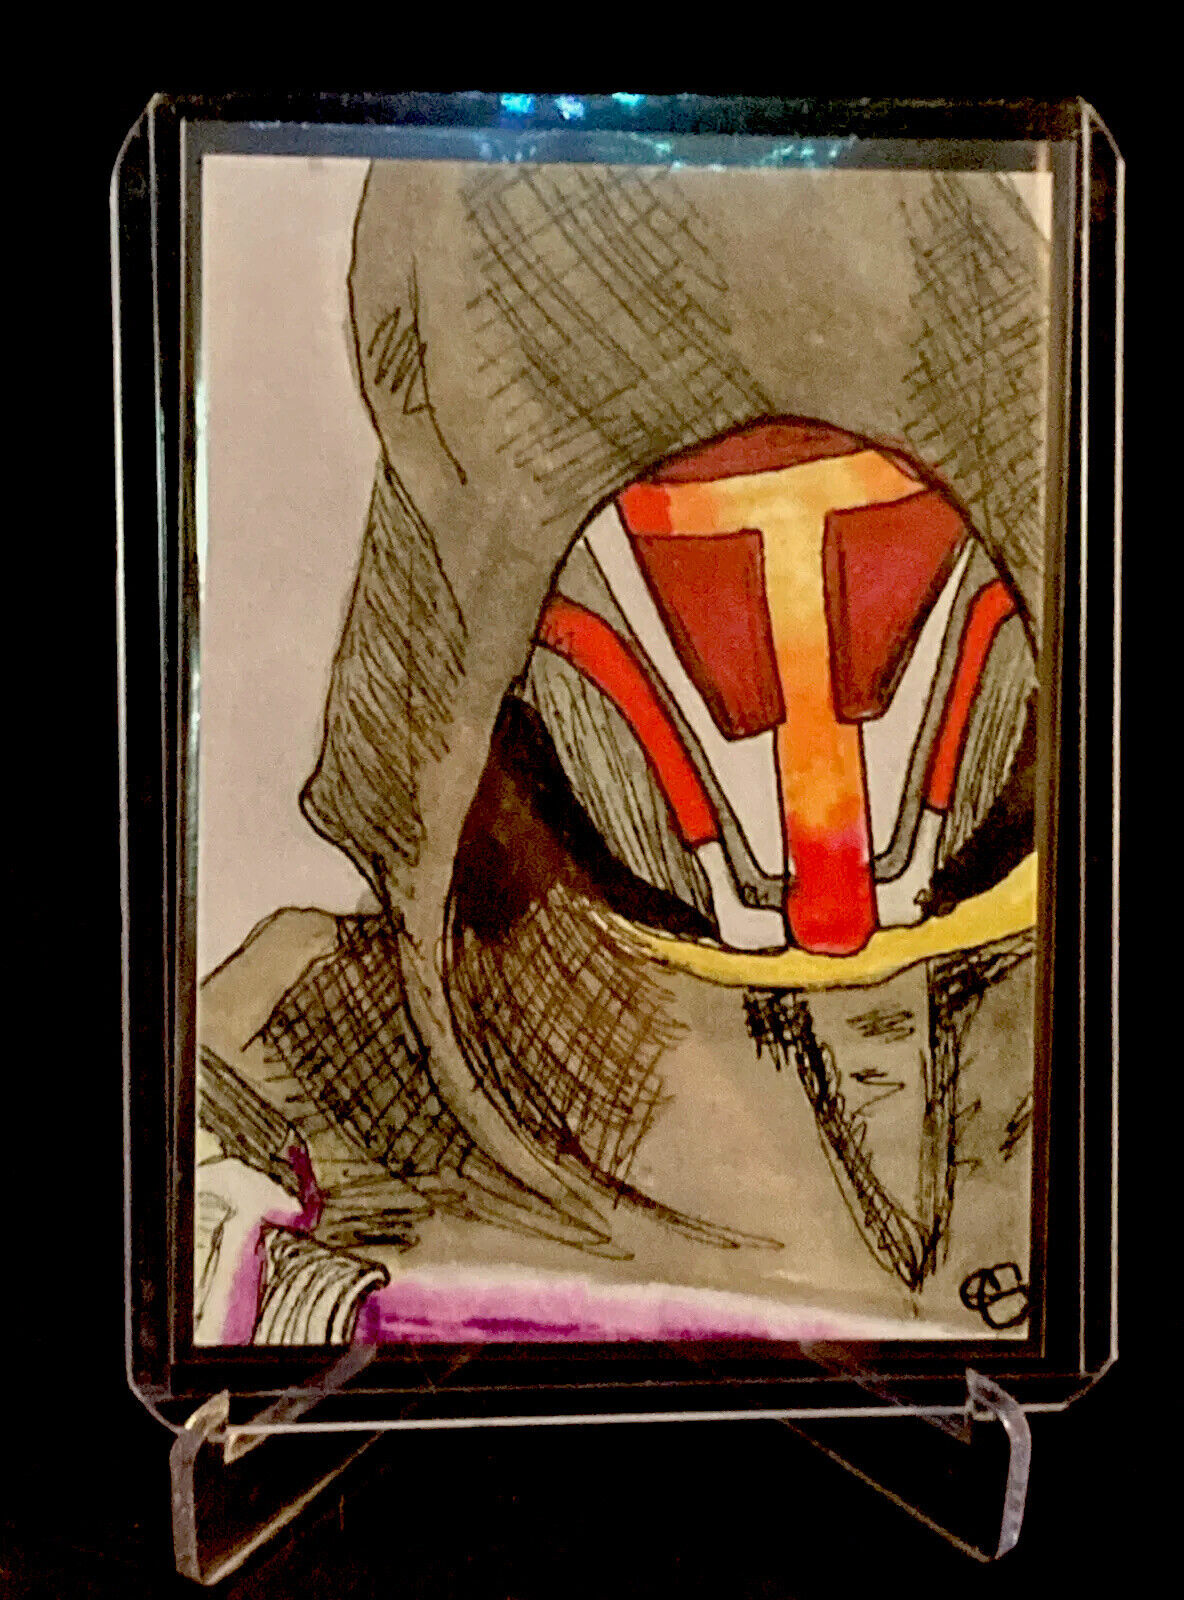 Star Wars Darth Revan Sketch Card Authentic Autograph By Original Artist - ACEO